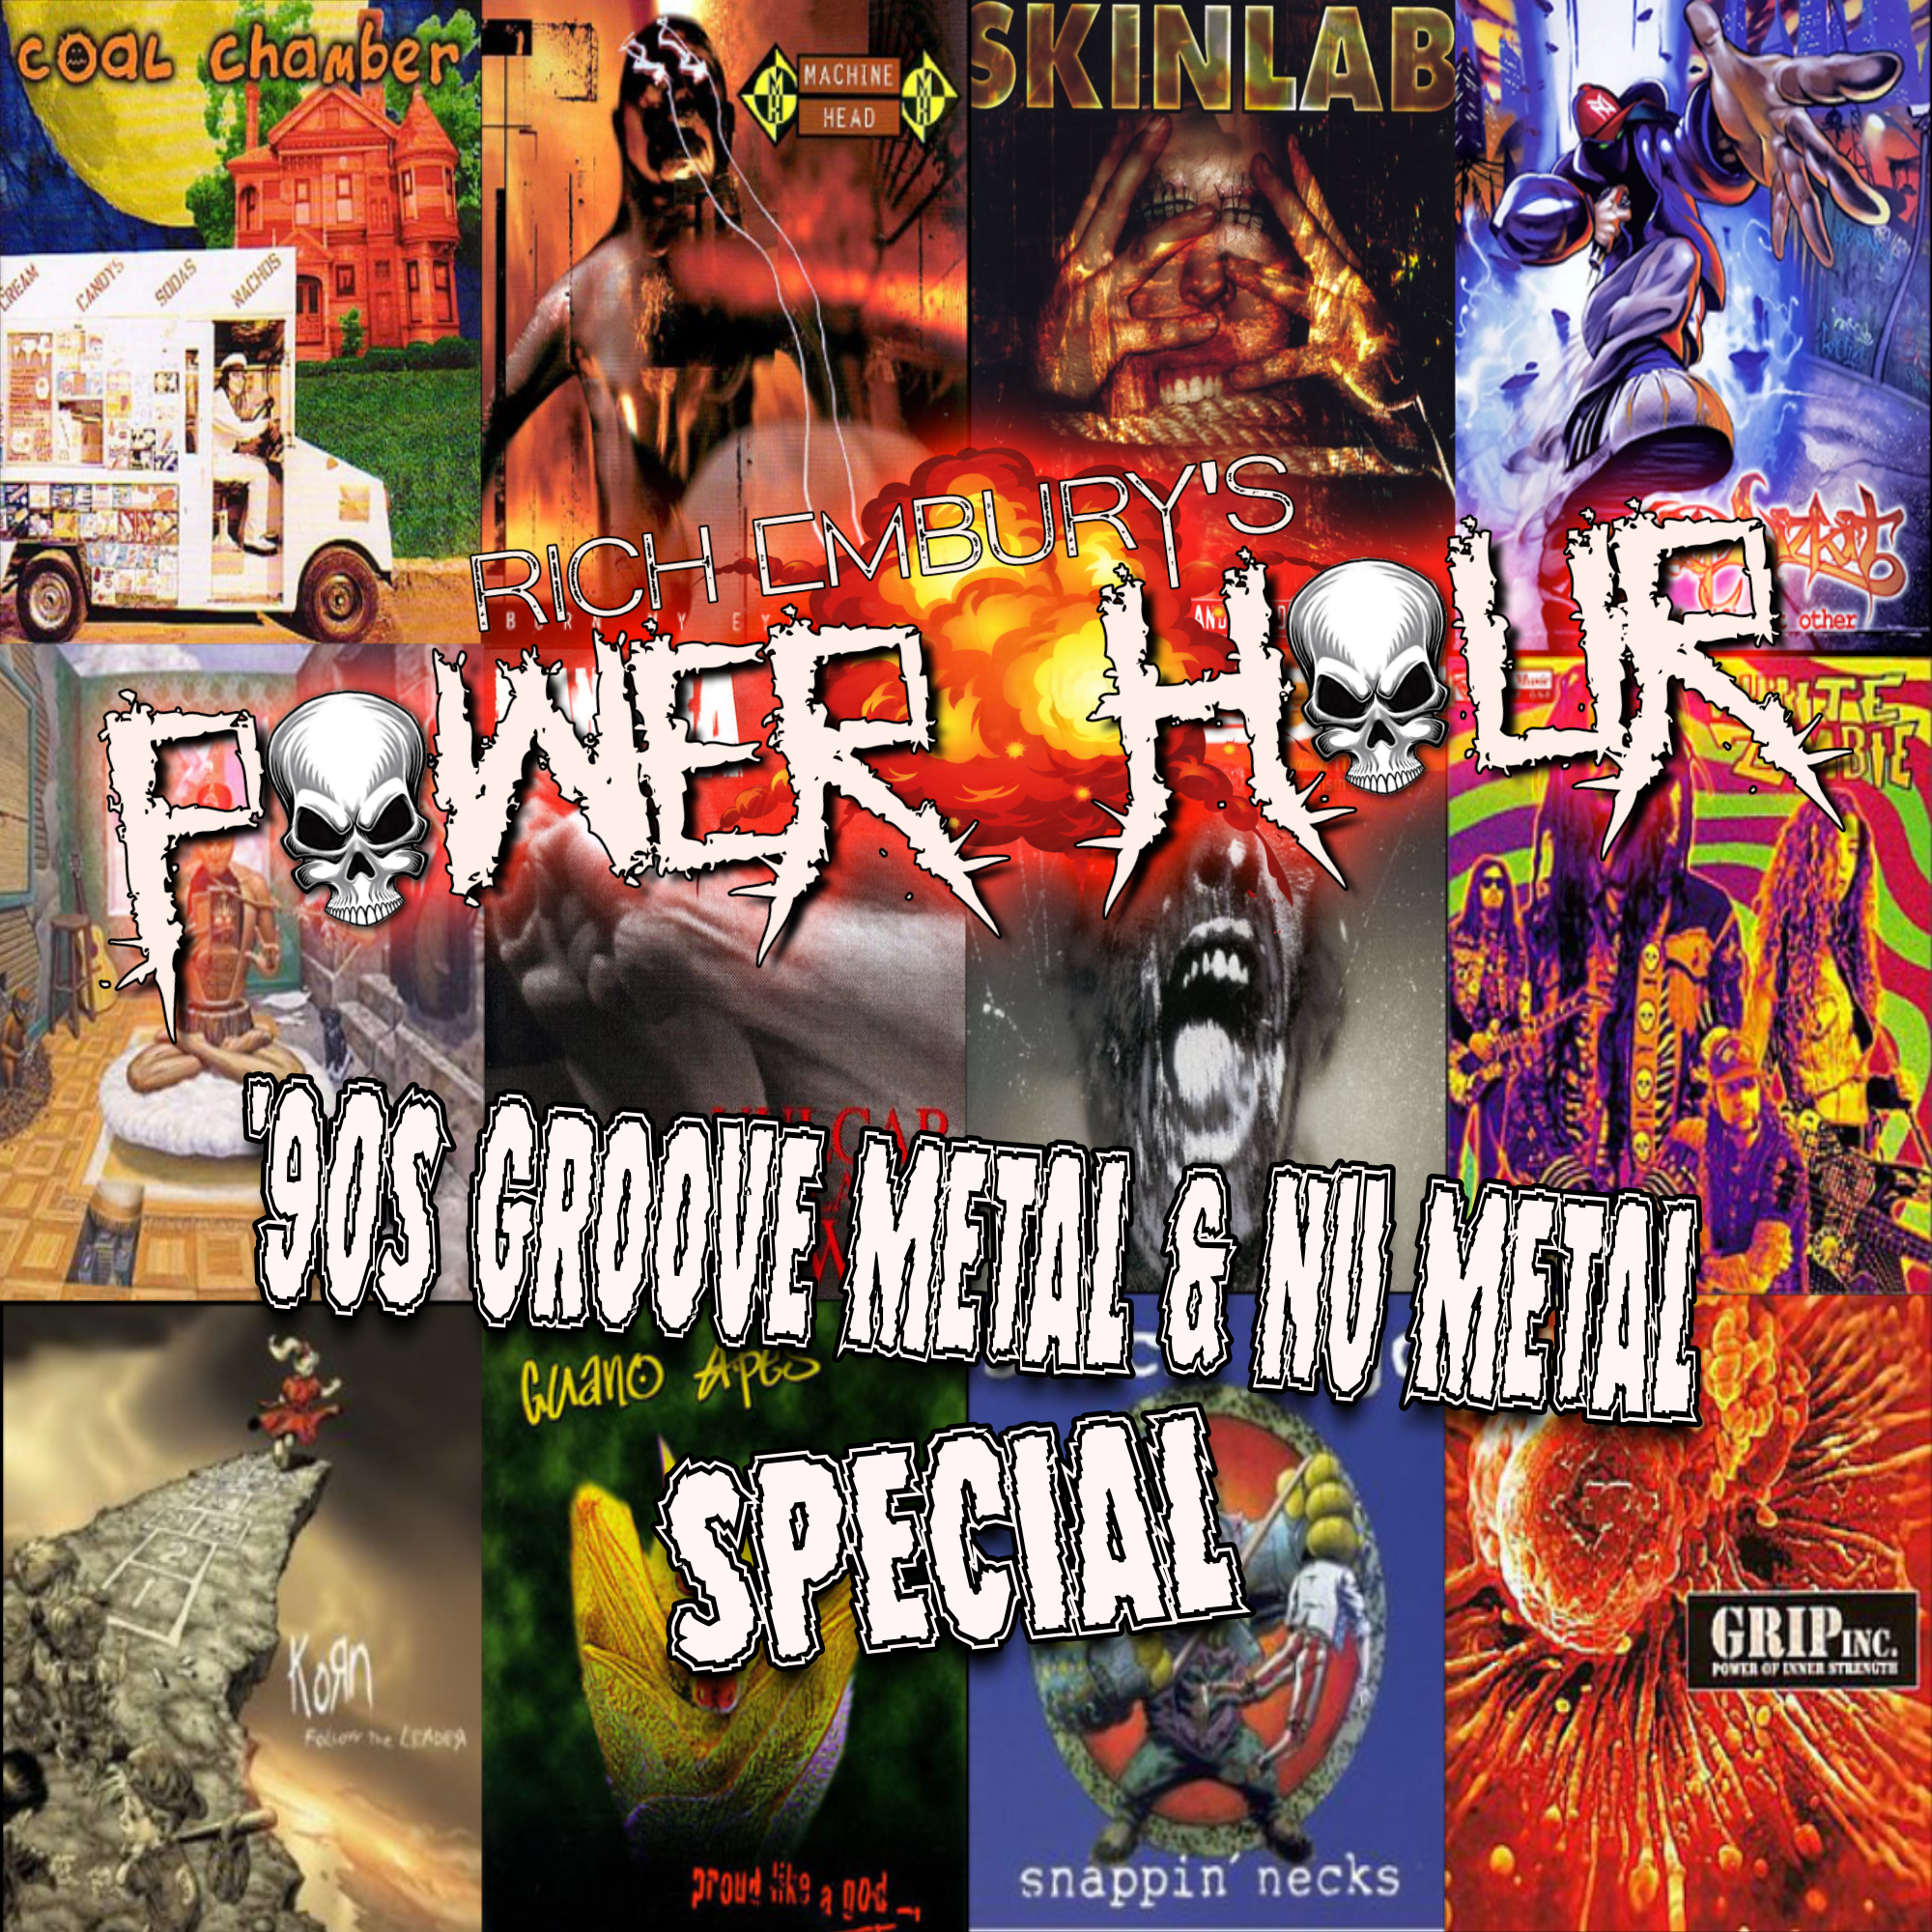 Rich Embury’s POWER HOUR // ’90s Groove Metal & Nu Metal Special! post thumbnail image